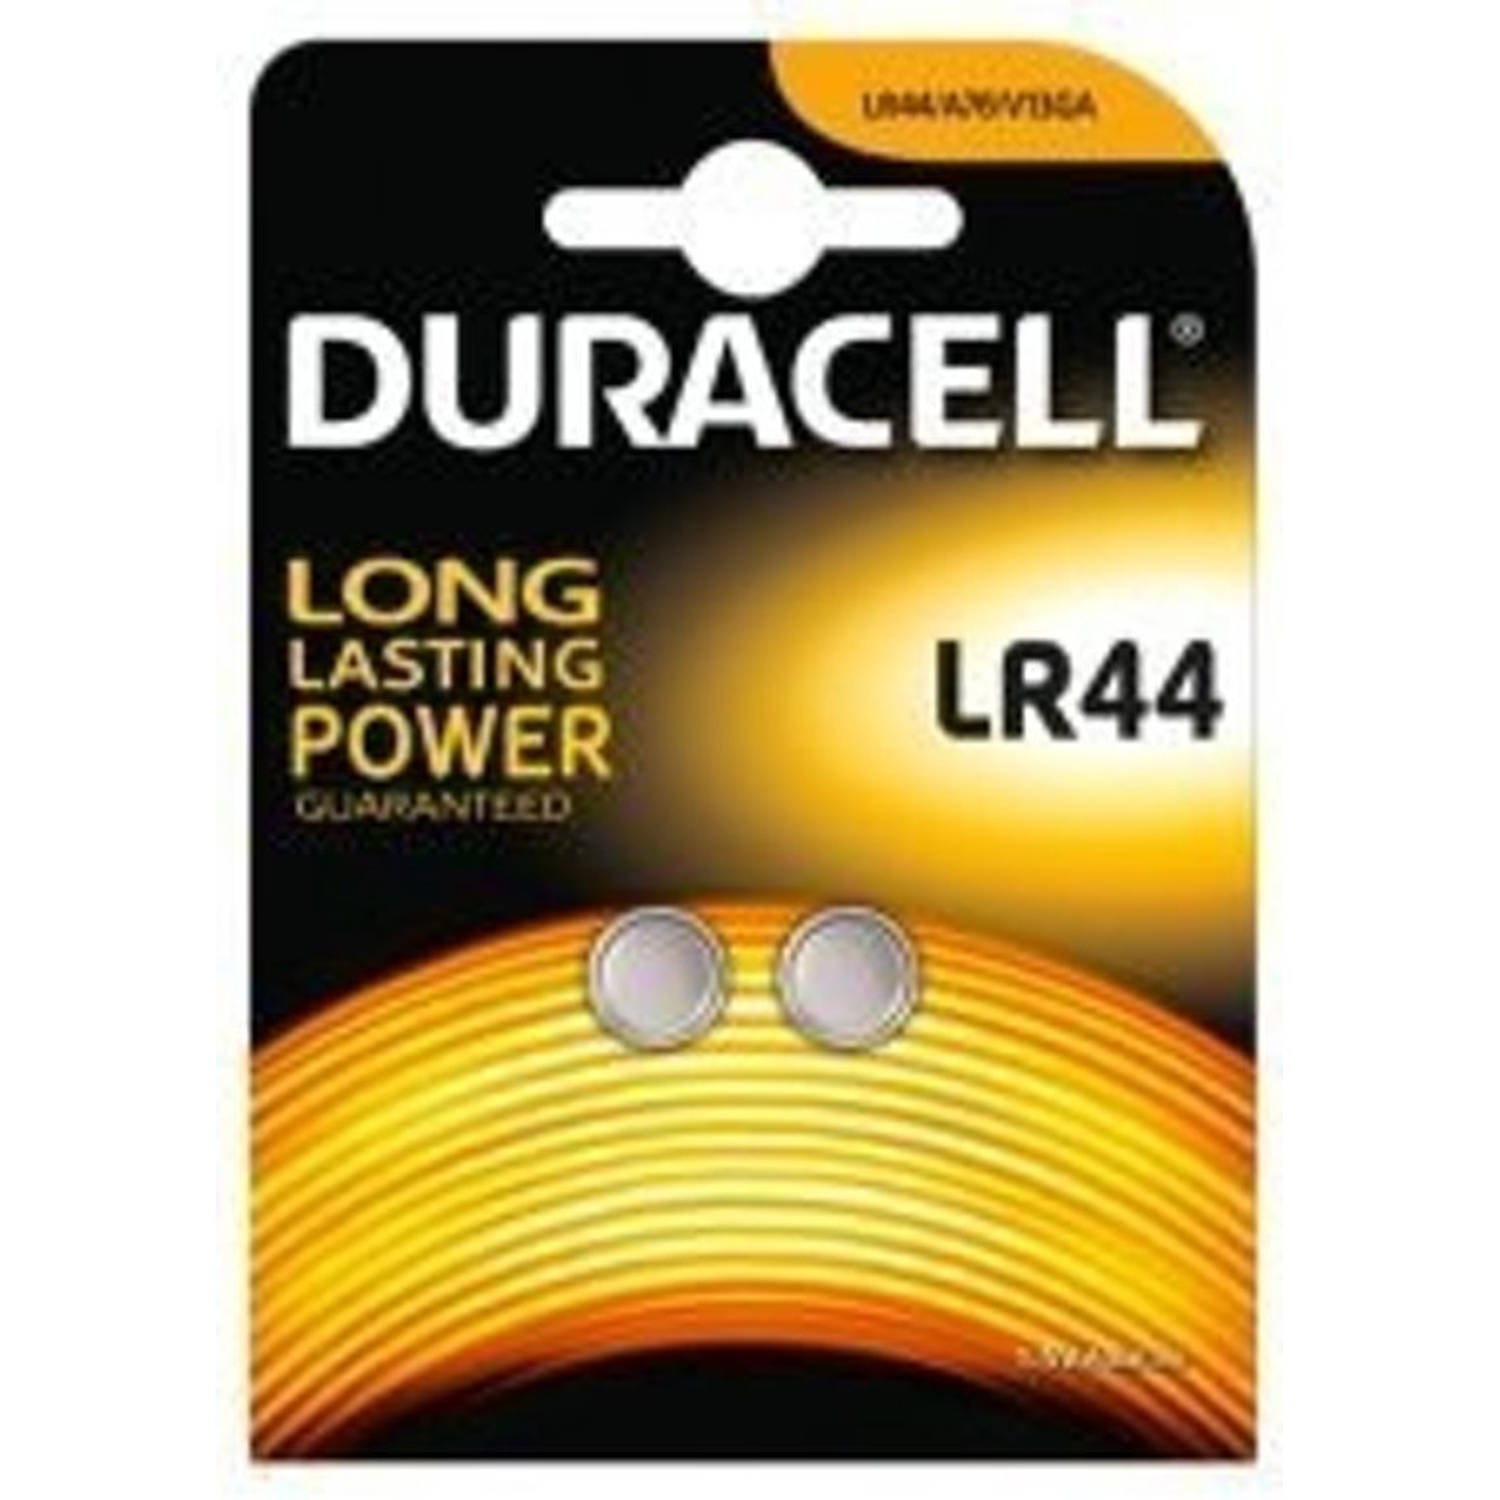 Duracell Knoopcel Batterij LR44 Alkaline - 2 stuks